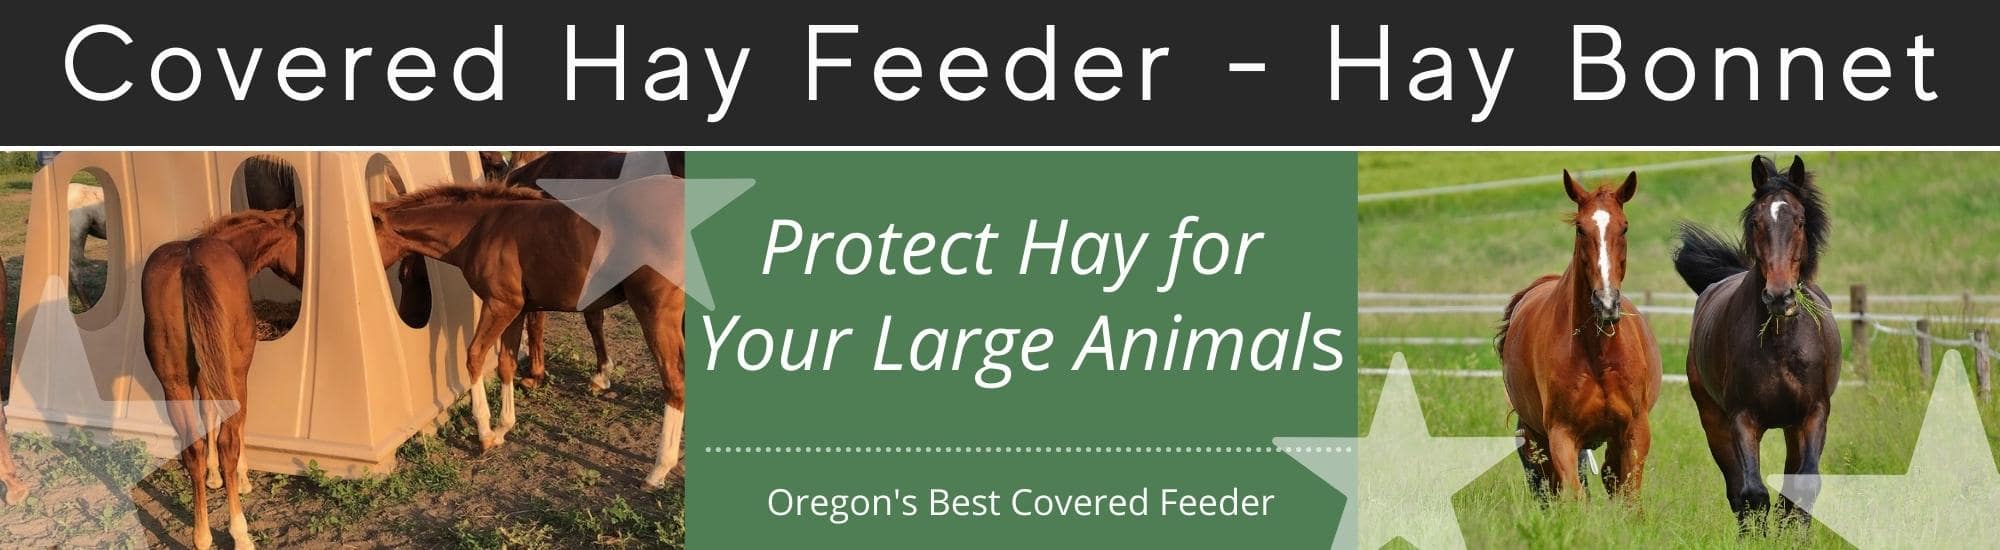 Covered Hay Feeder Oregon